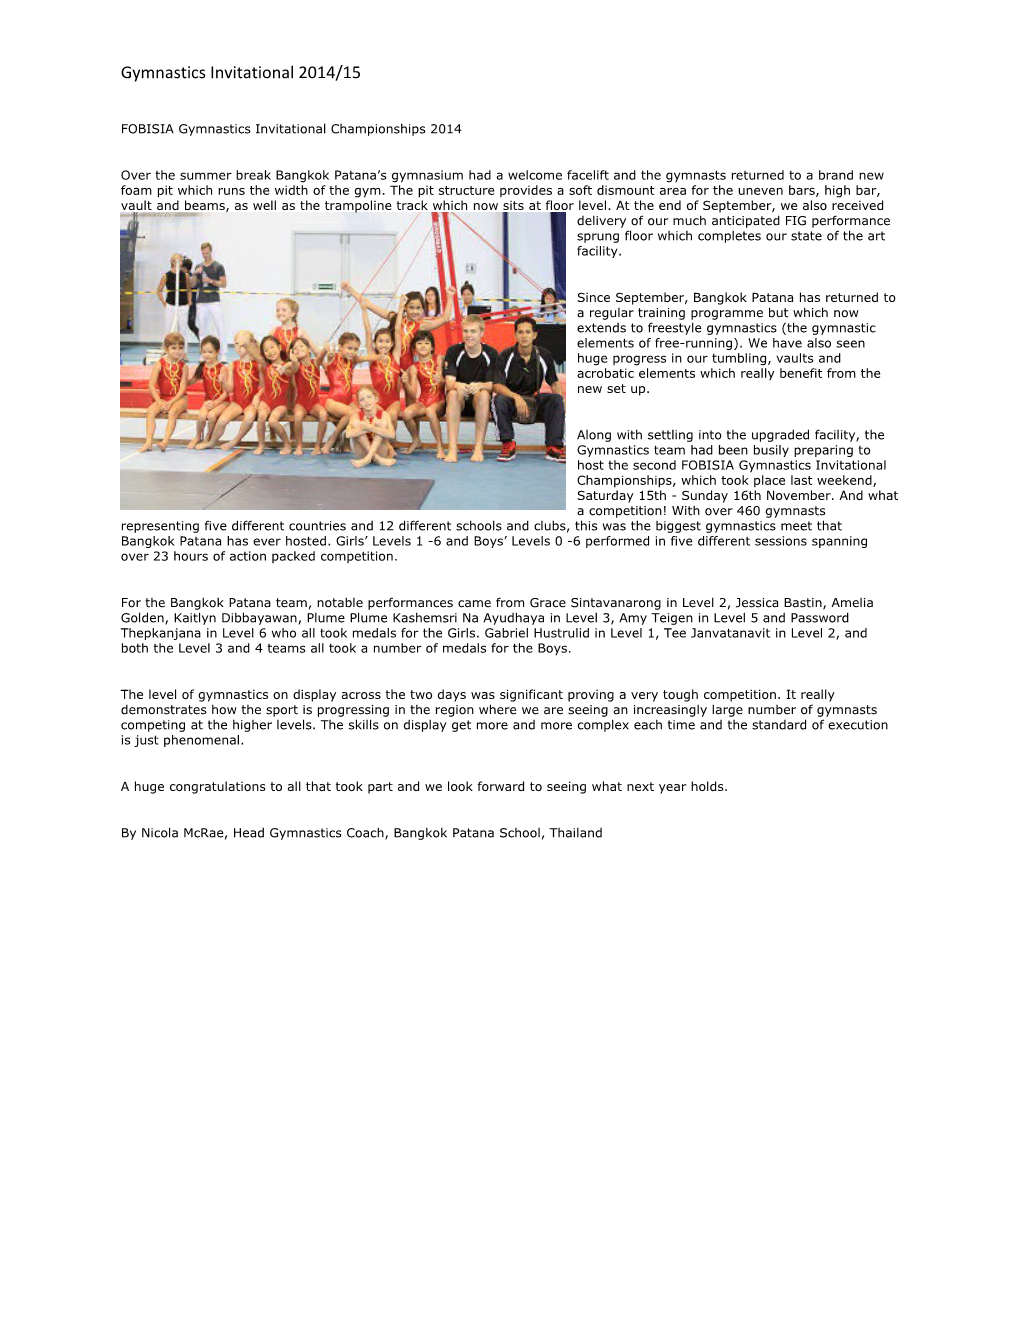 FOBISIA Gymnastics Invitational Championships 2014